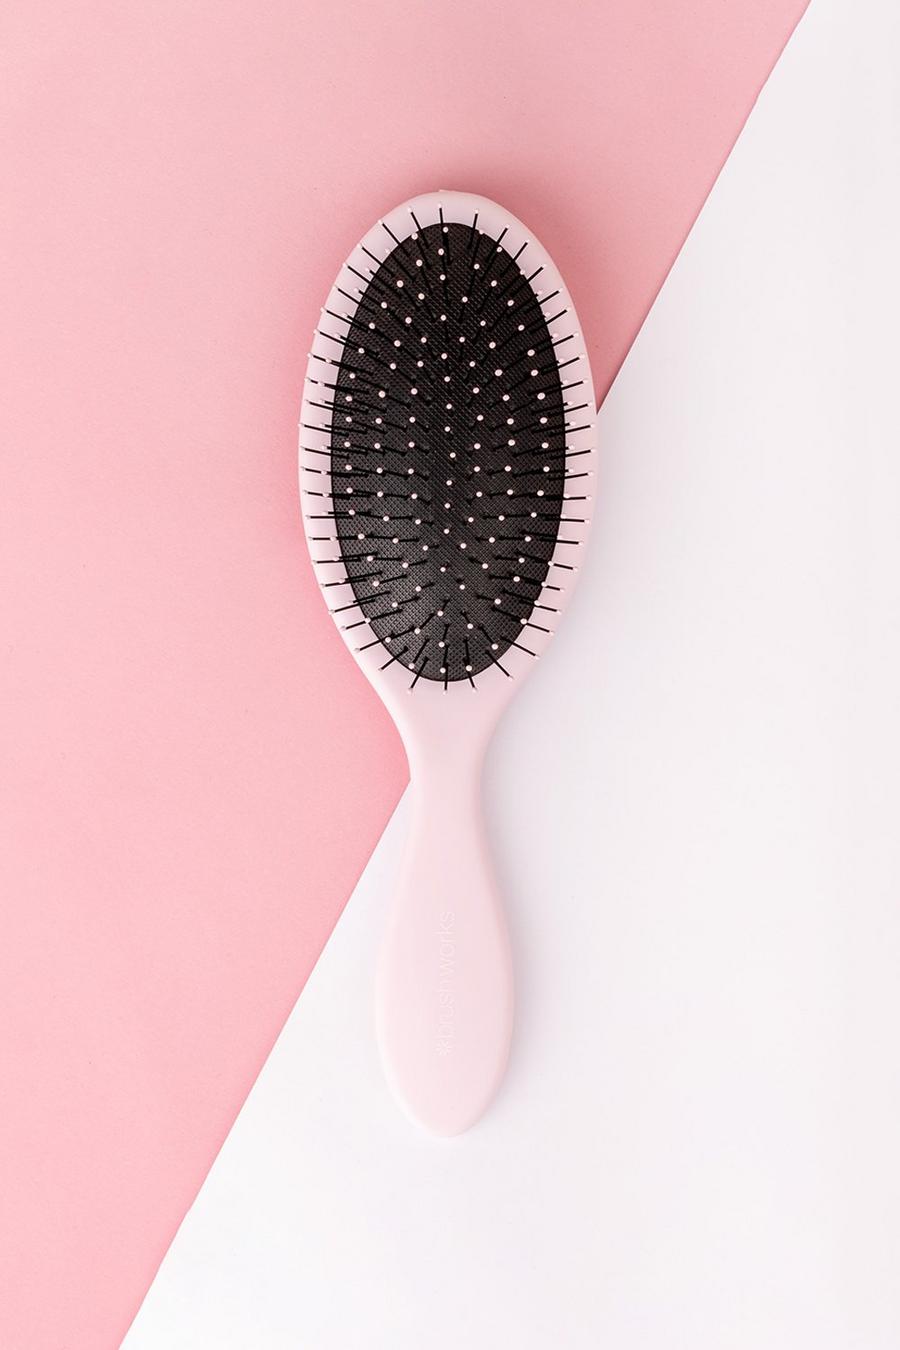 Brushworks - Spazzola per capelli professionale anti-nodi, Pink rosa